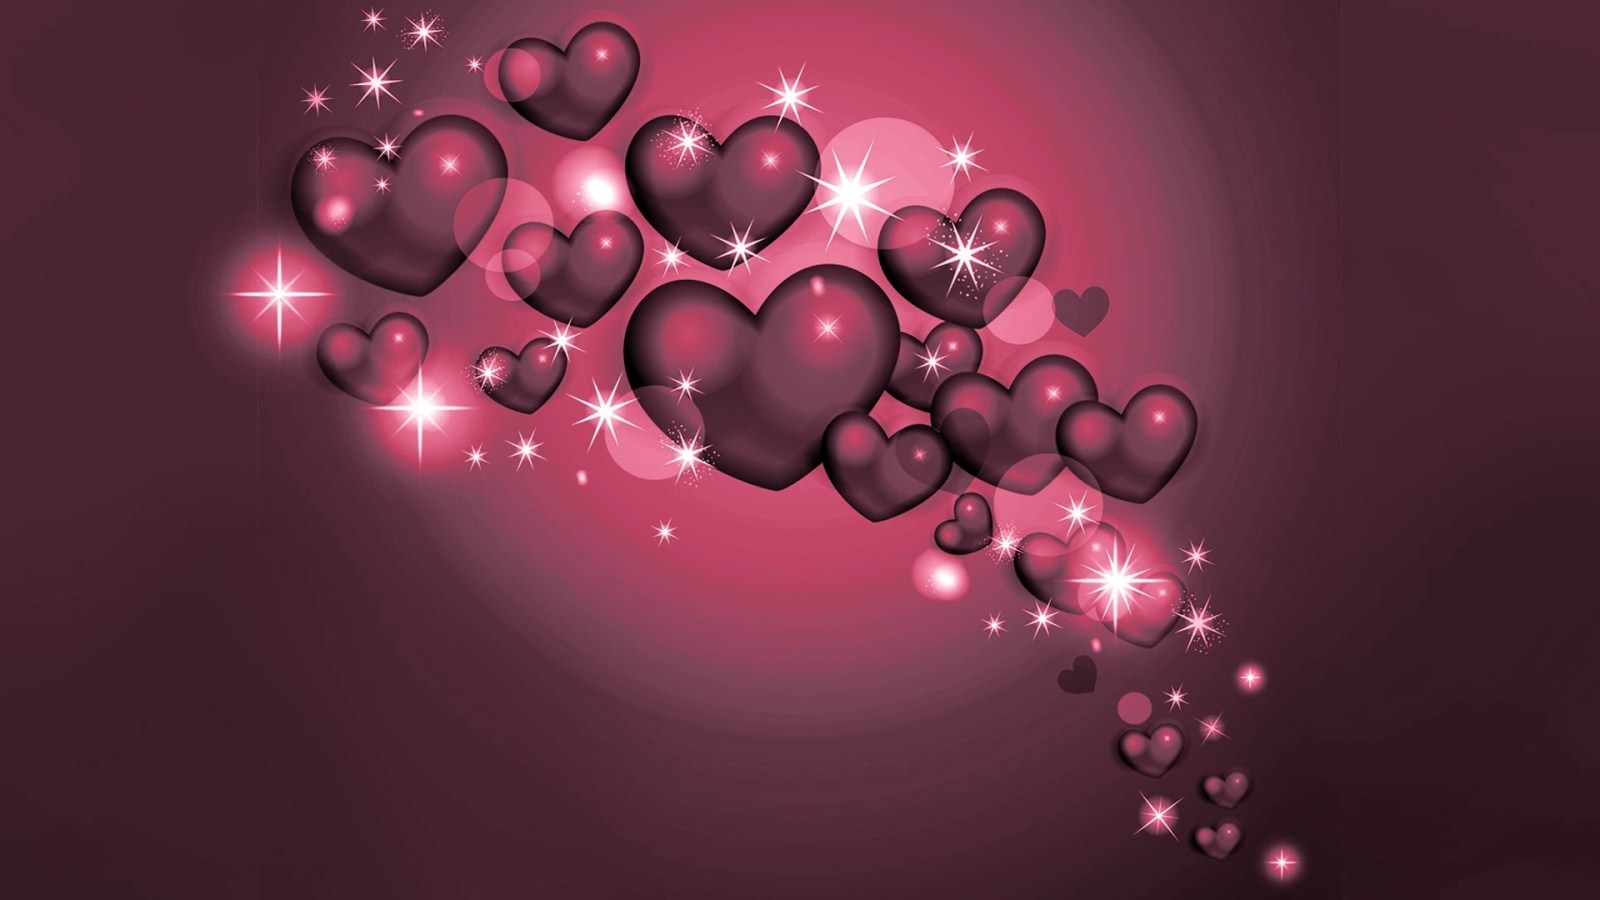 72+] Love Heart Wallpaper Hd - WallpaperSafari